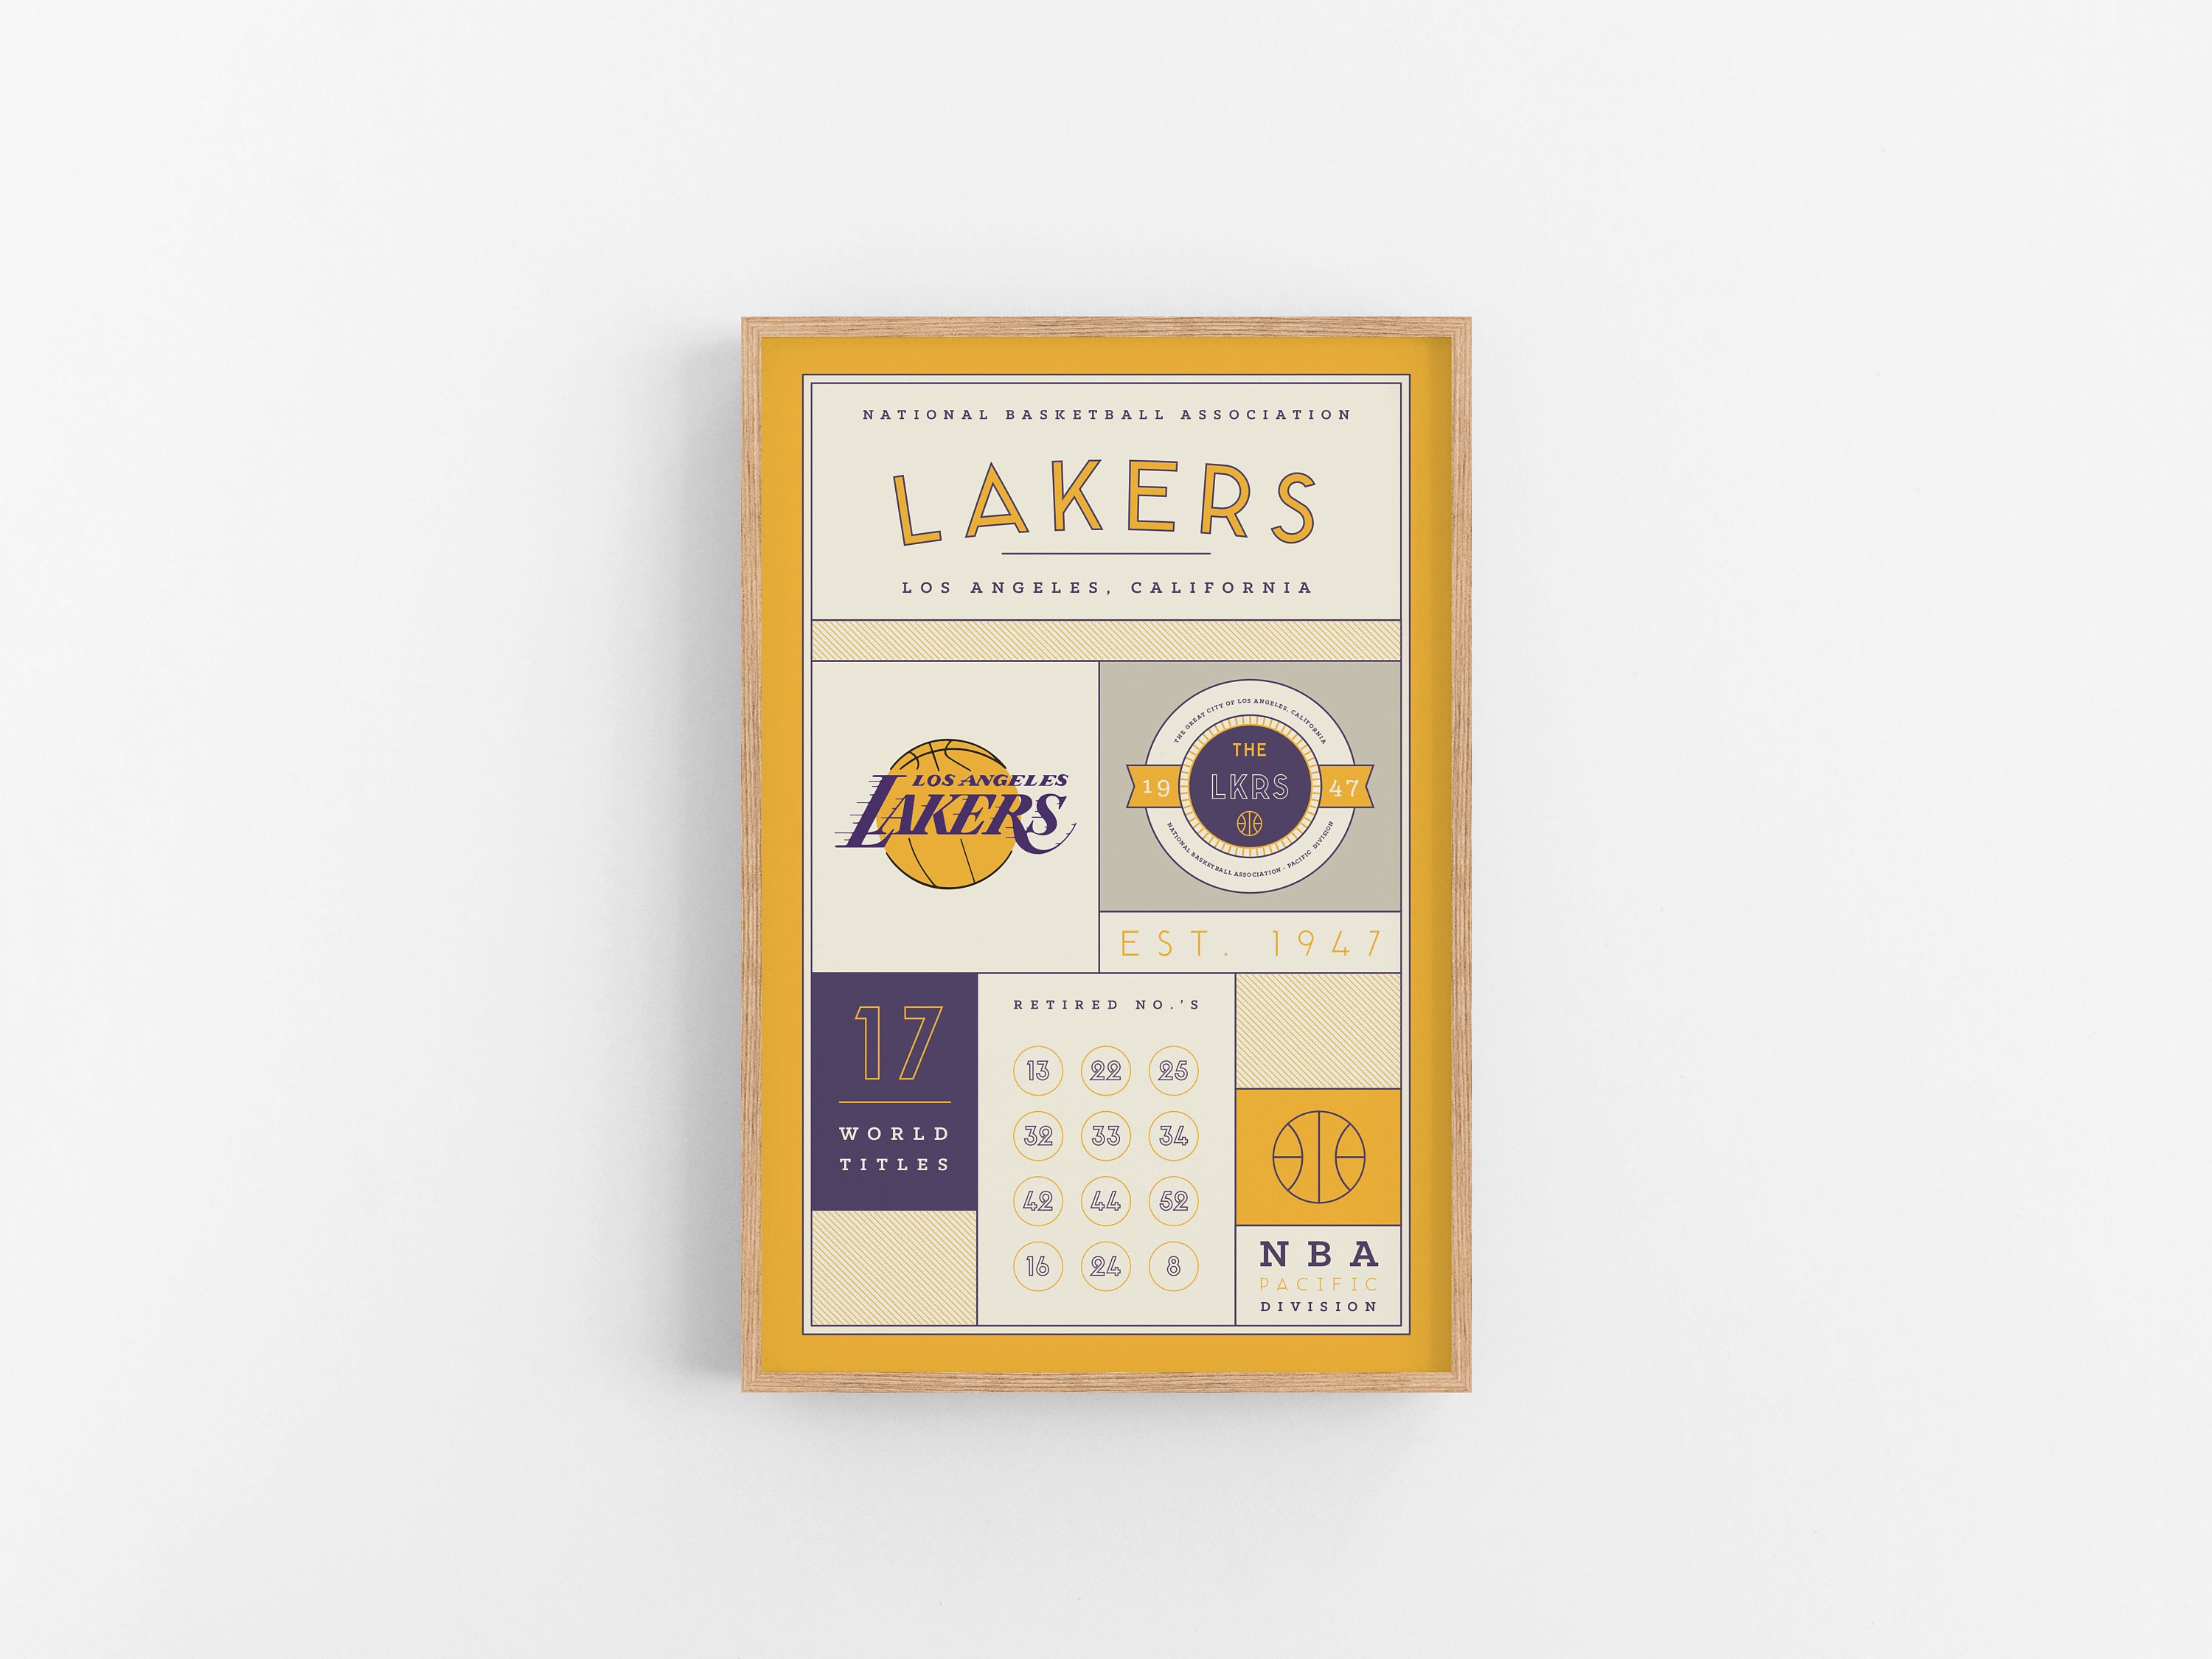 Los Angeles Lakers SVG • NBA Basketball Team T-shirt SVG Design